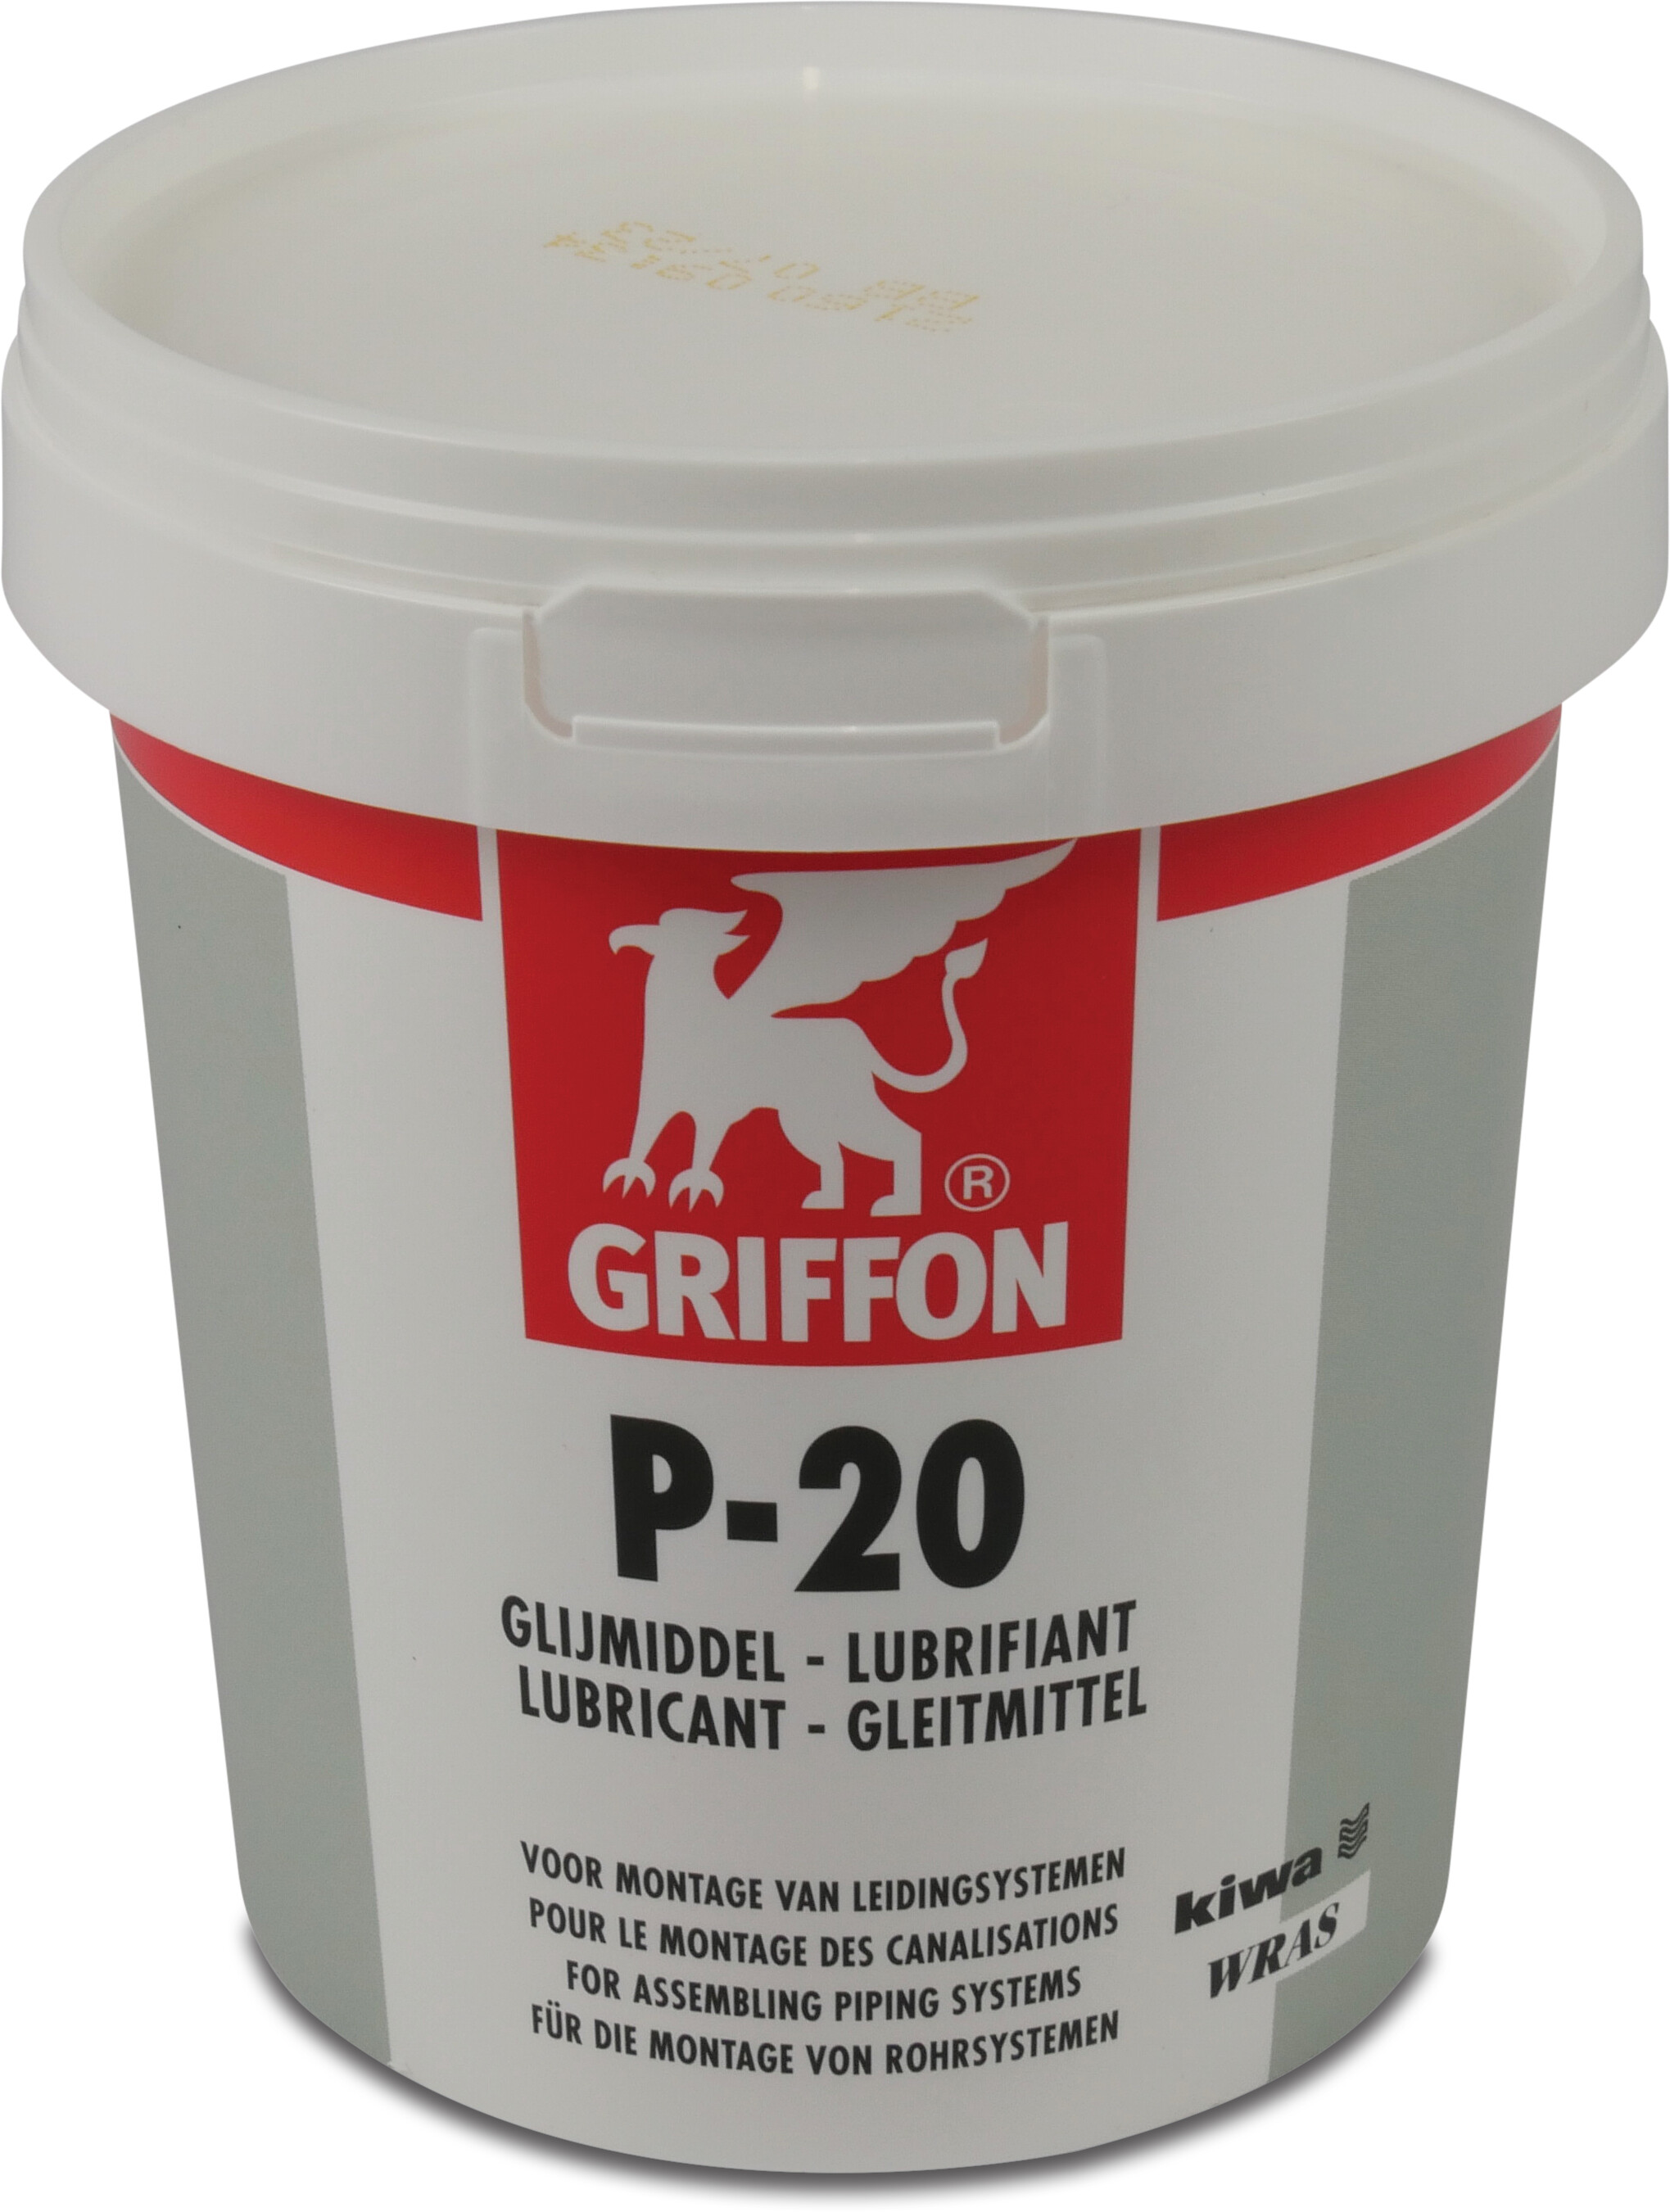 Griffon Glijmiddel 700g pot KIWA type Lubricant